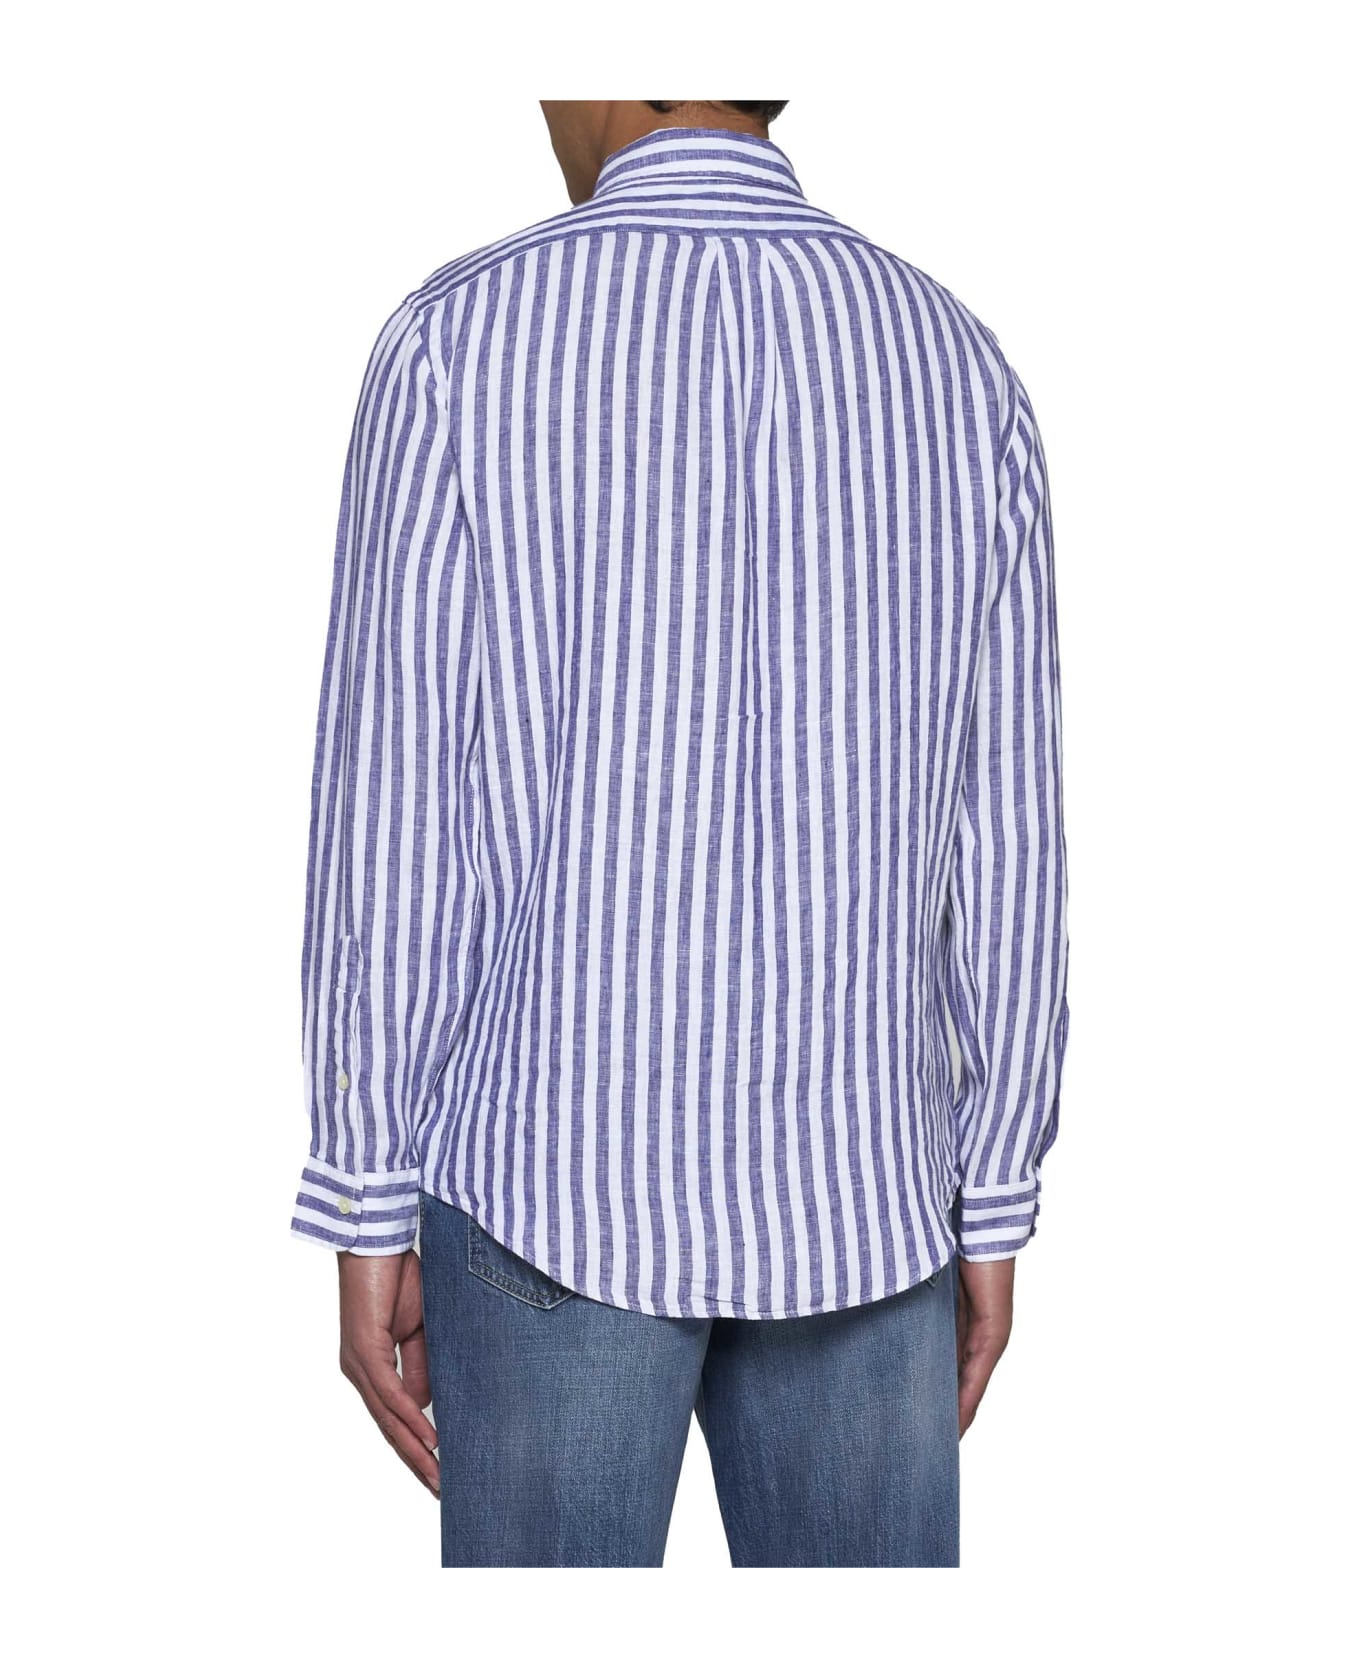 Polo Ralph Lauren Shirt - 5138a blue white